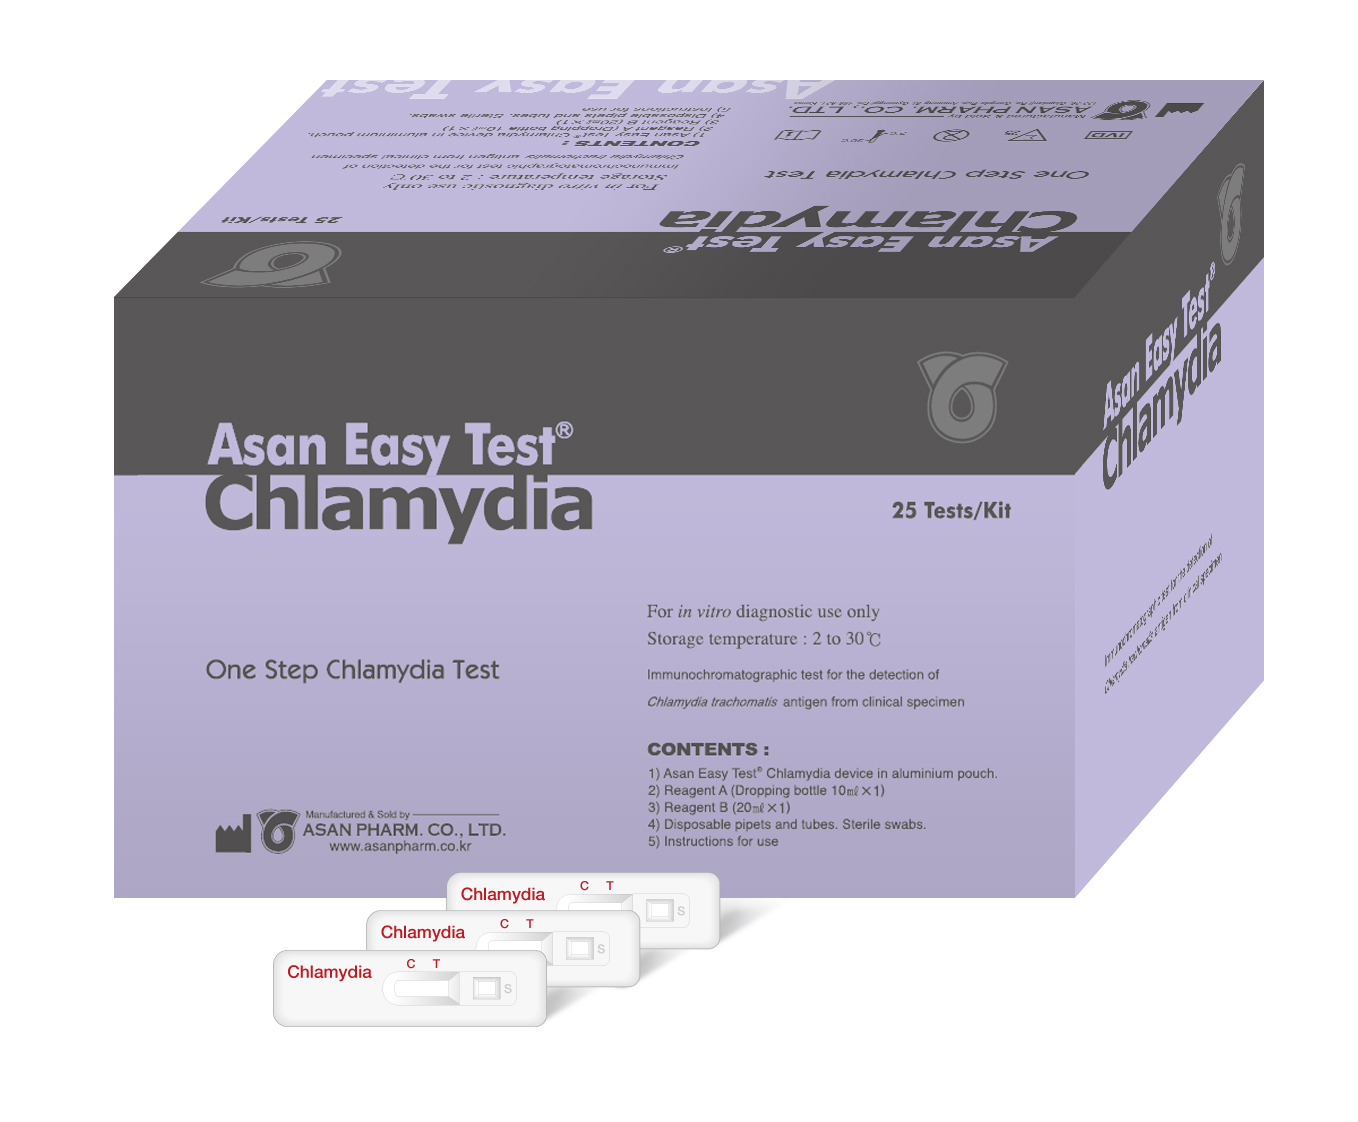 Asan Easy Test Chlamydia